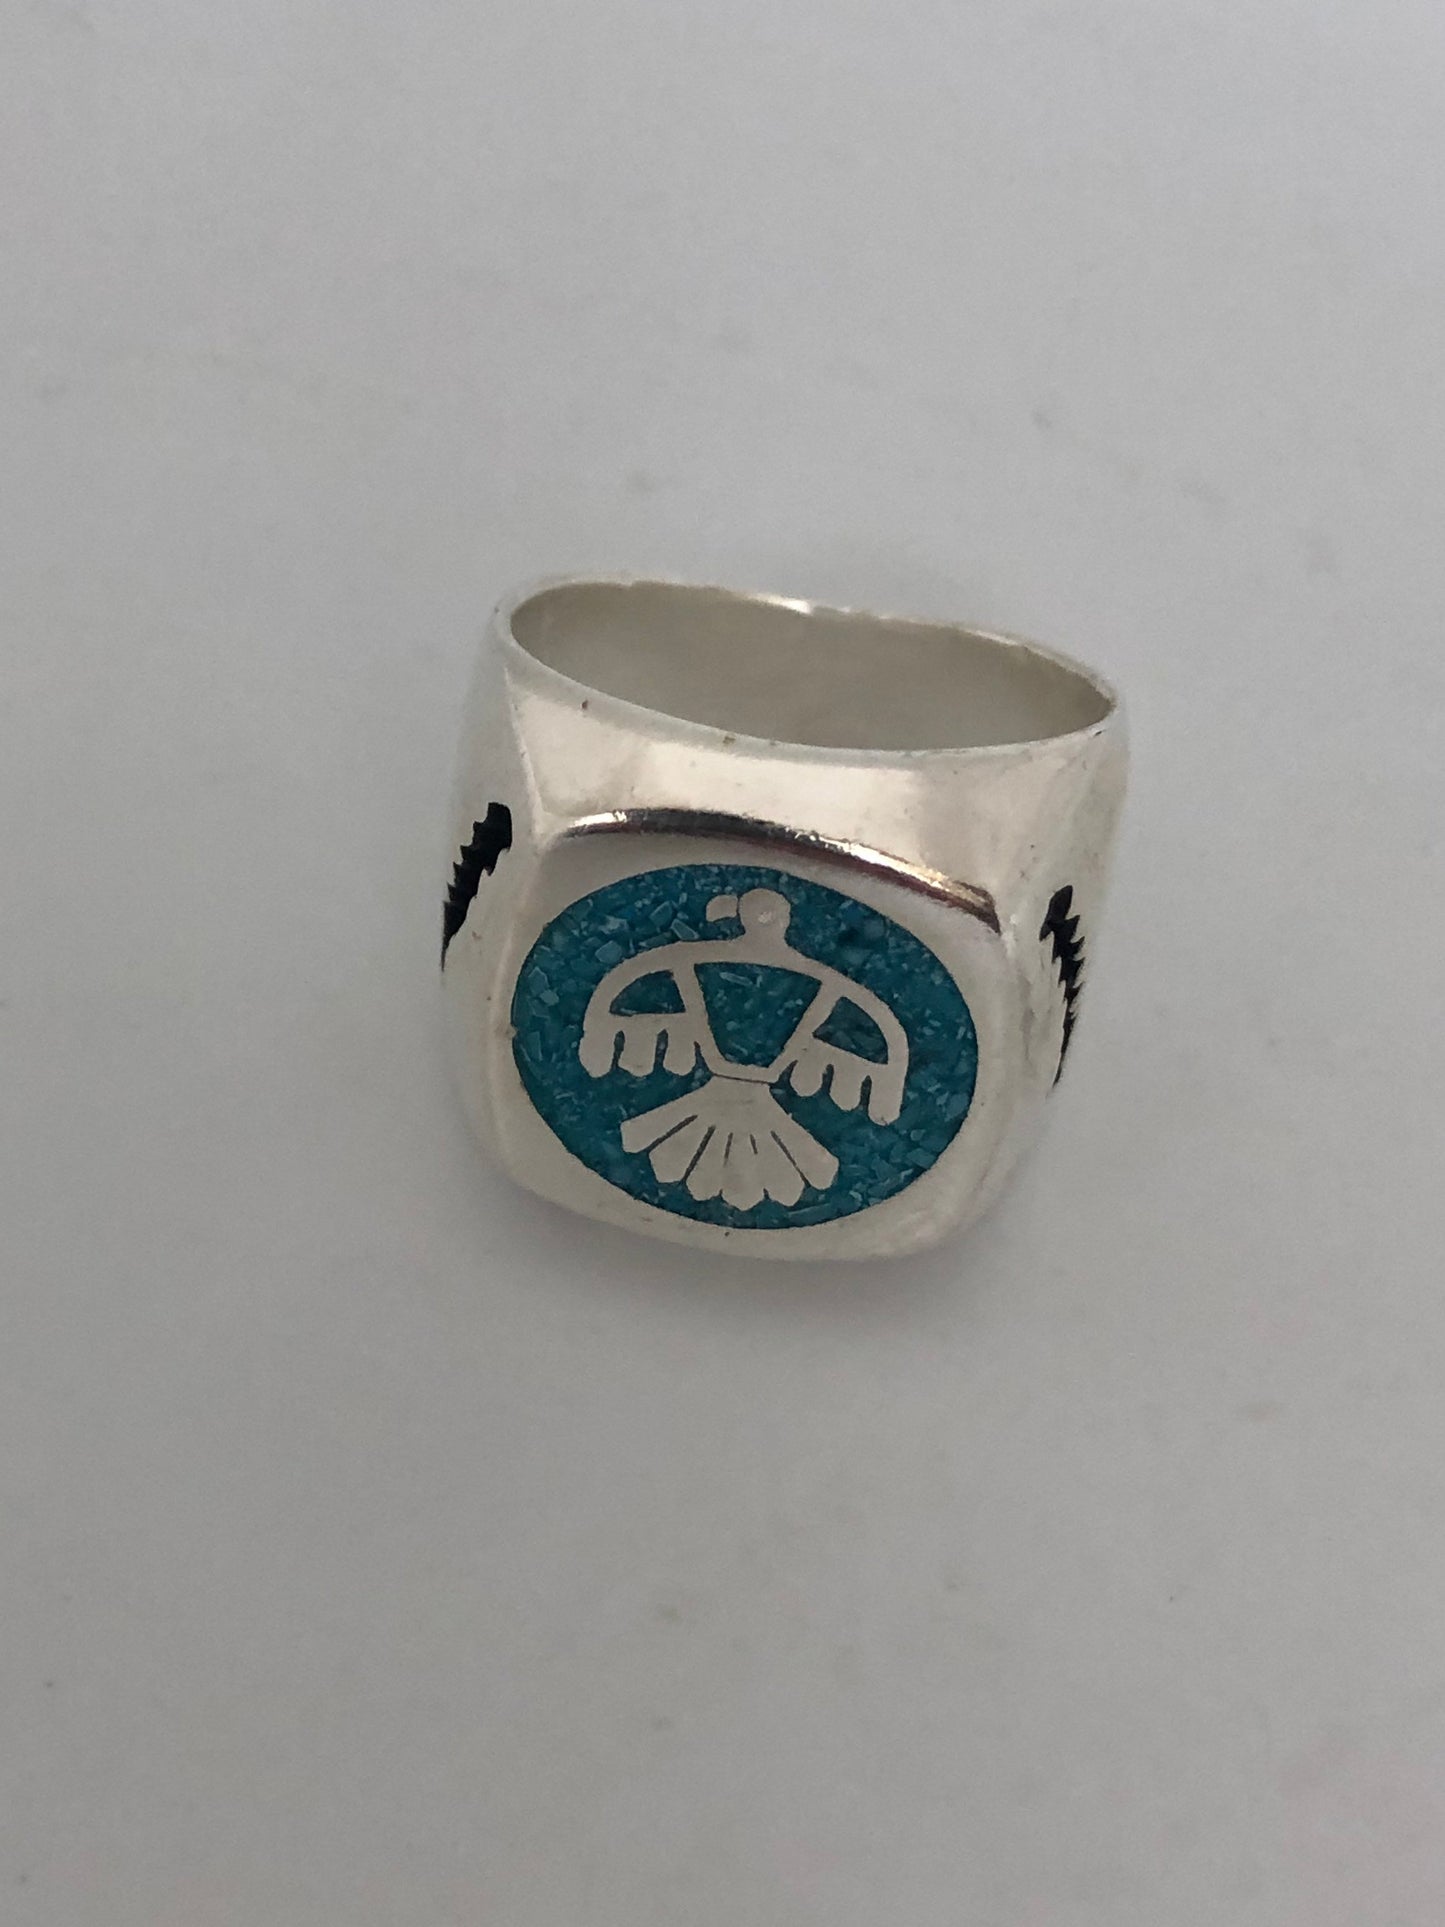 Thunderbird Ring Native American Style Southwestern Turquoise Stone Inlay Mens Ring white background